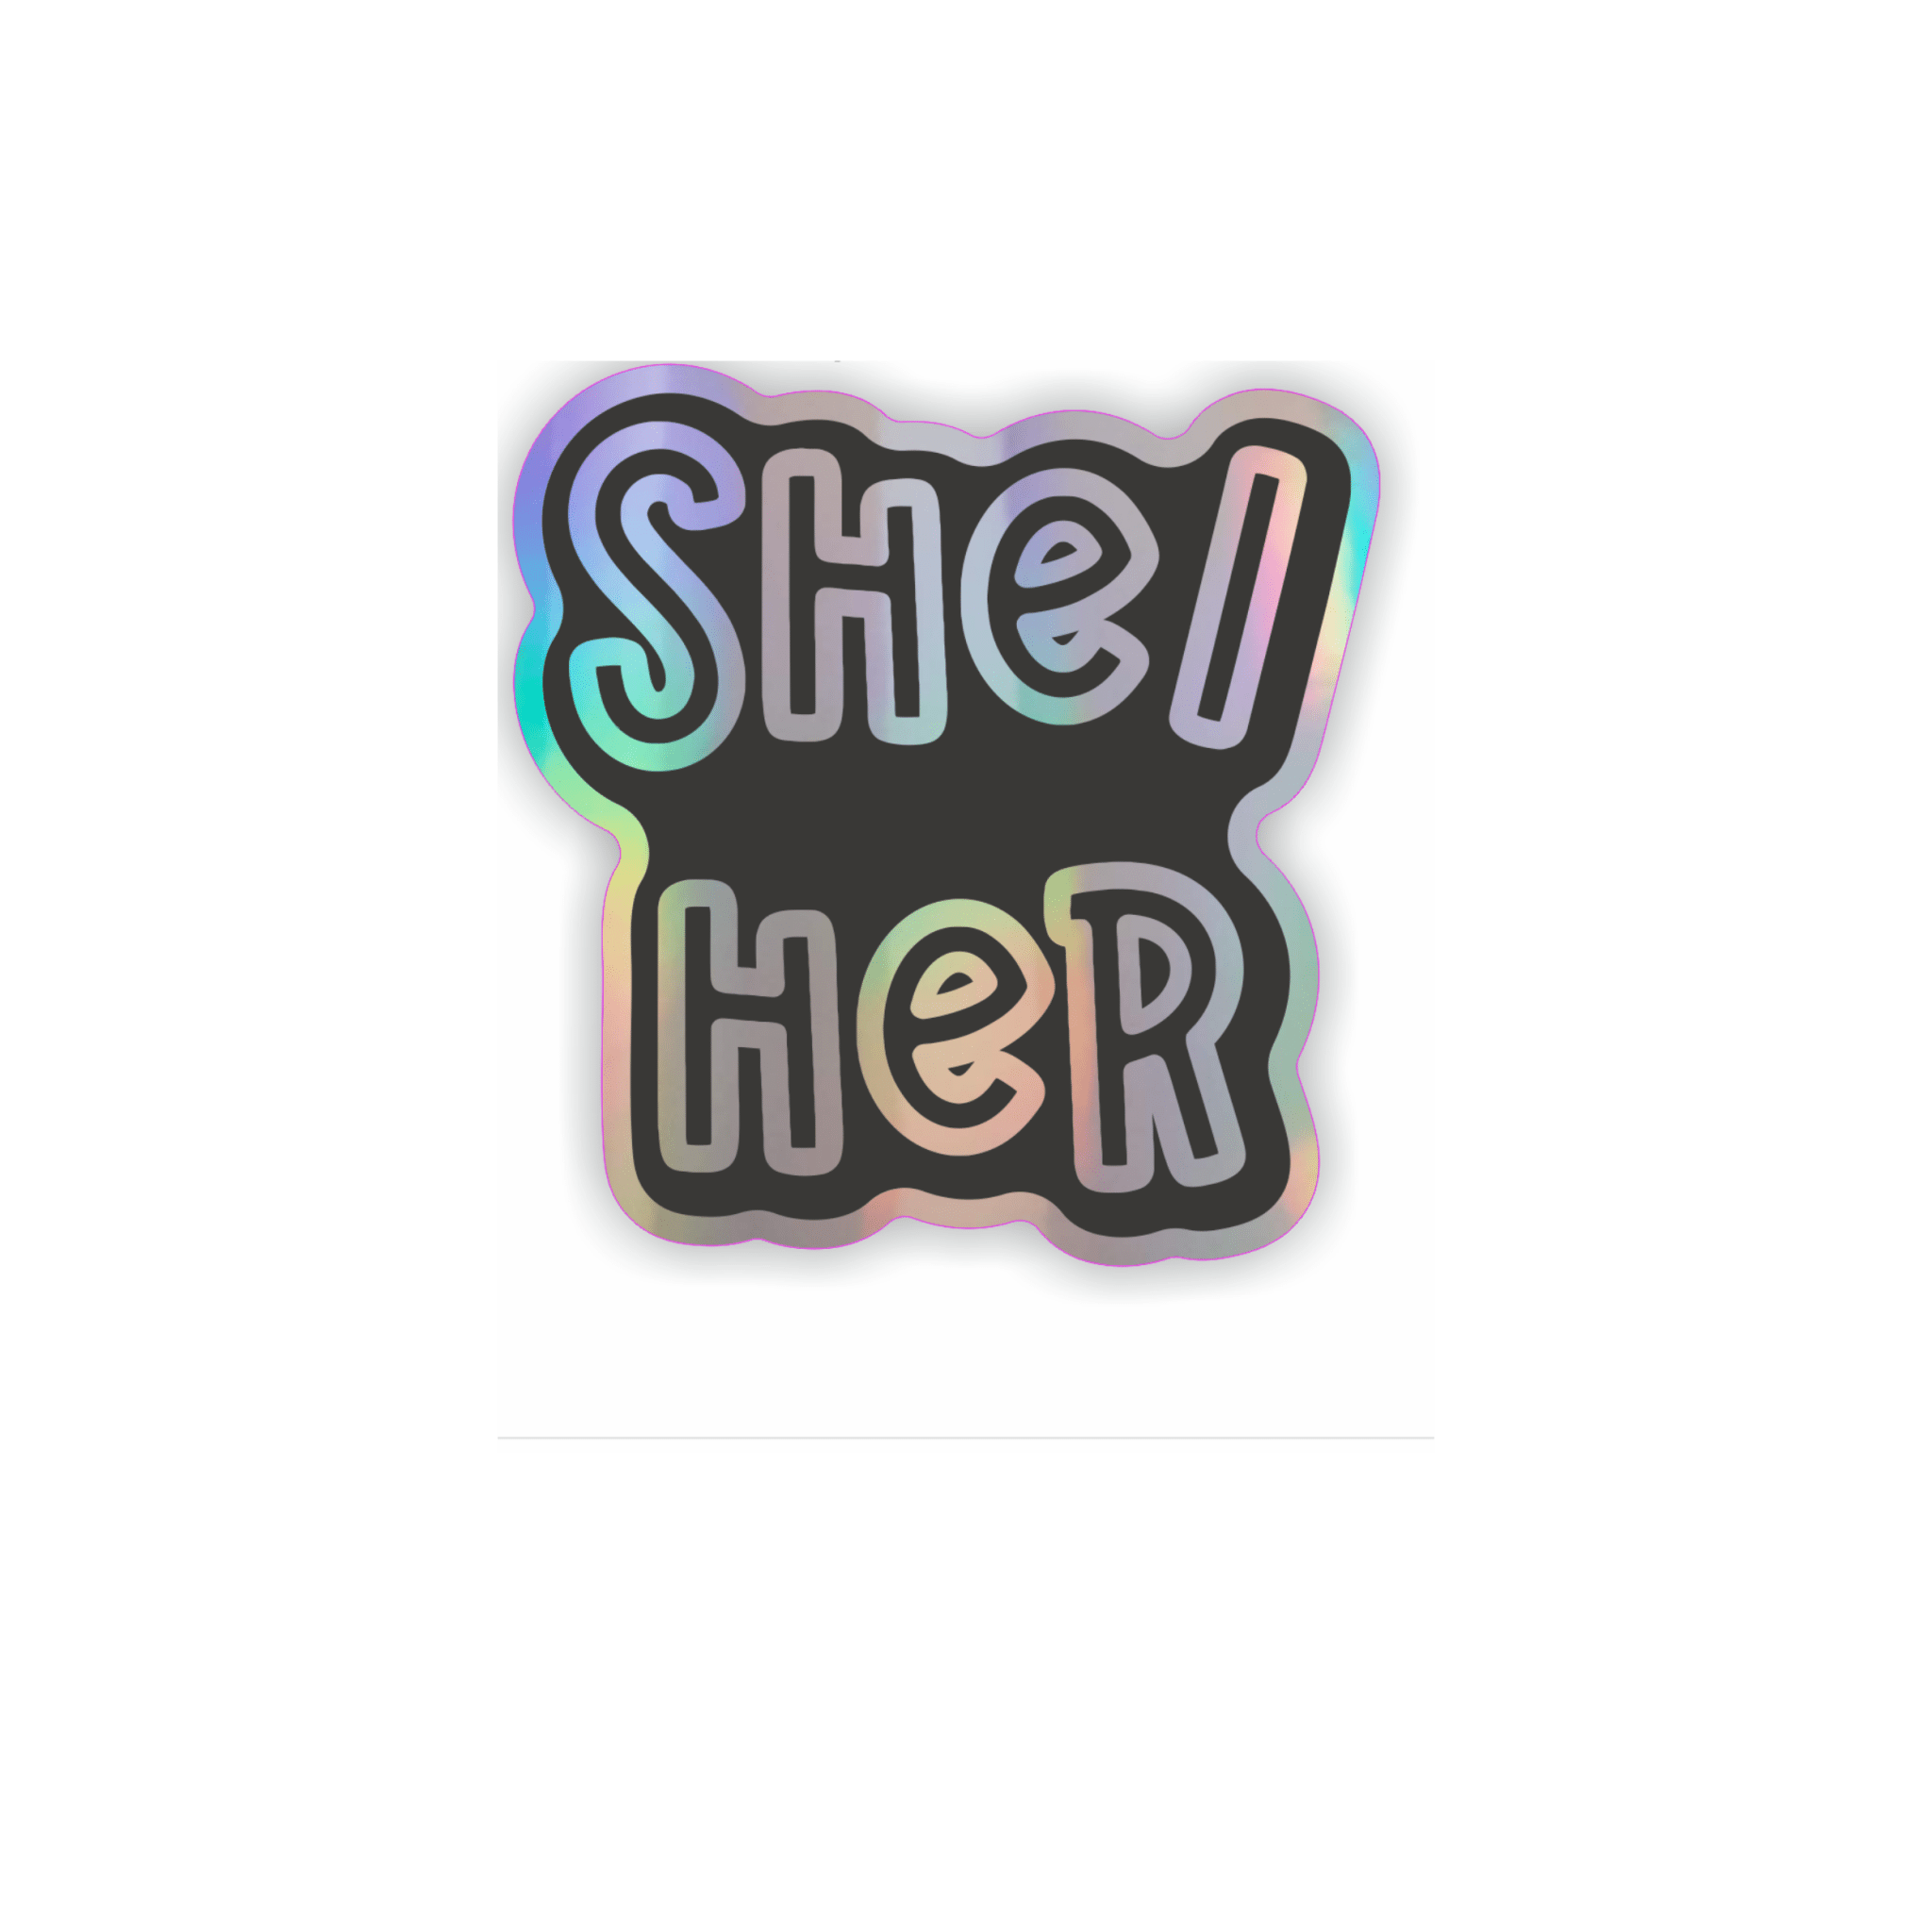 She/her pronoun holographic vinyl sticker - Spiral Circle